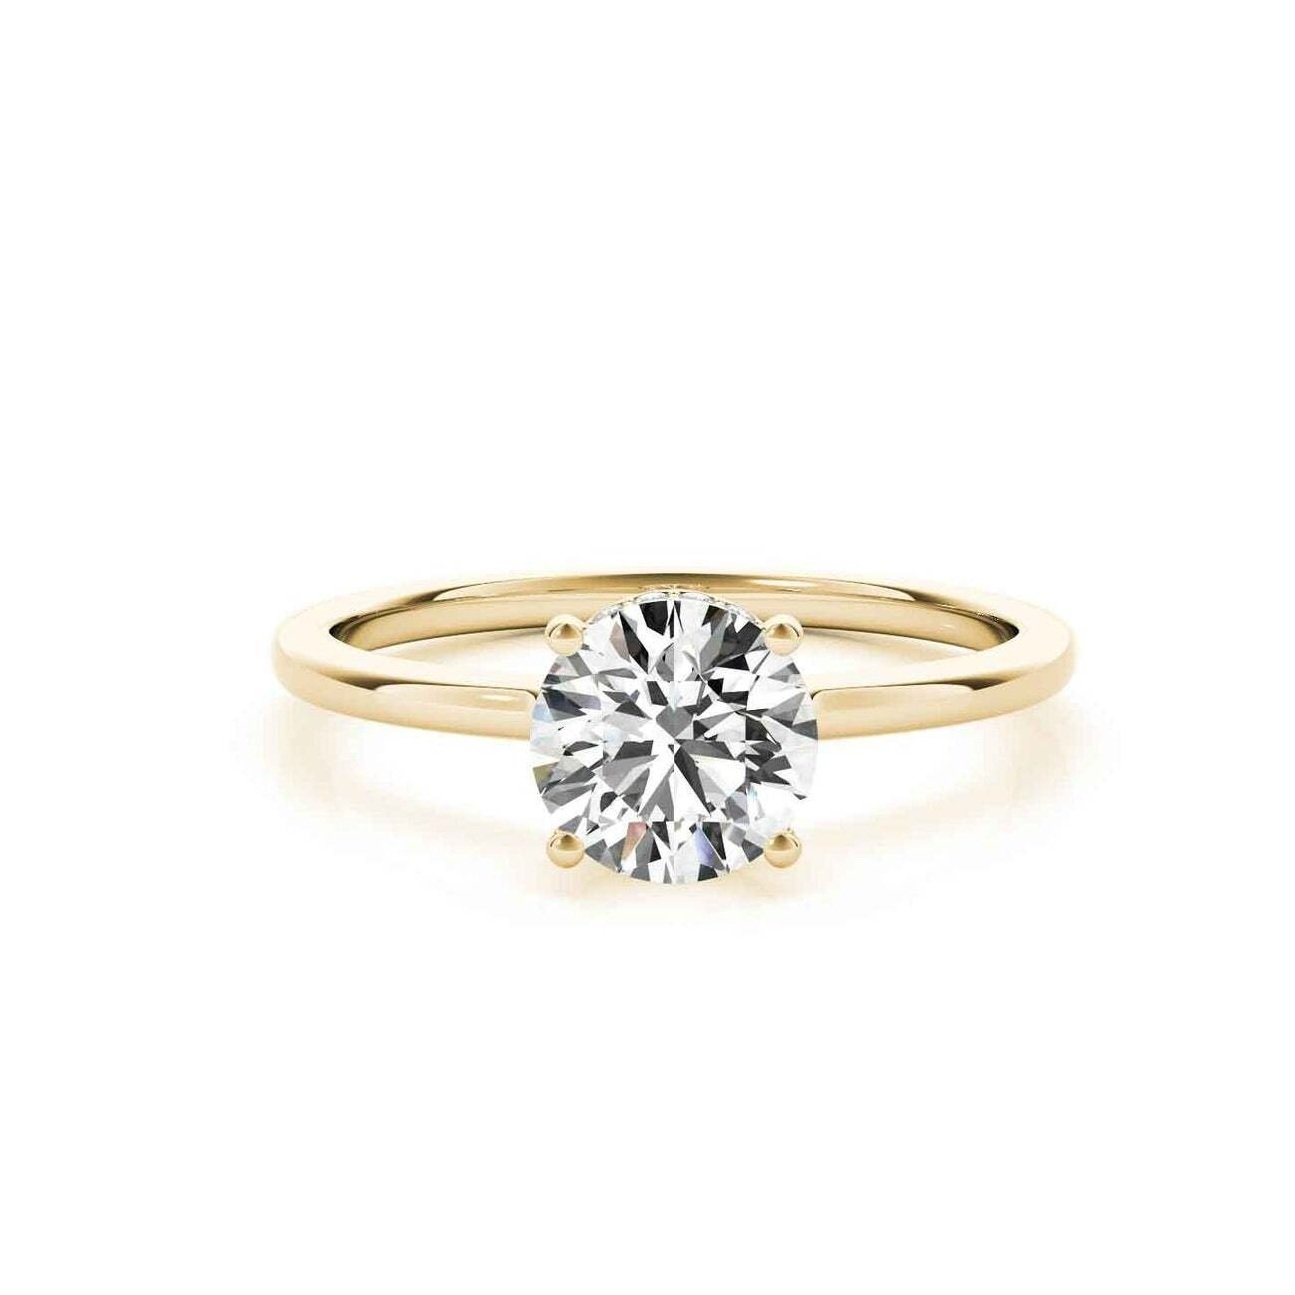 Lisa Robin Casey Hidden Halo Diamond Engagement Ring in 14k Yellow Gold, starting at $1,050